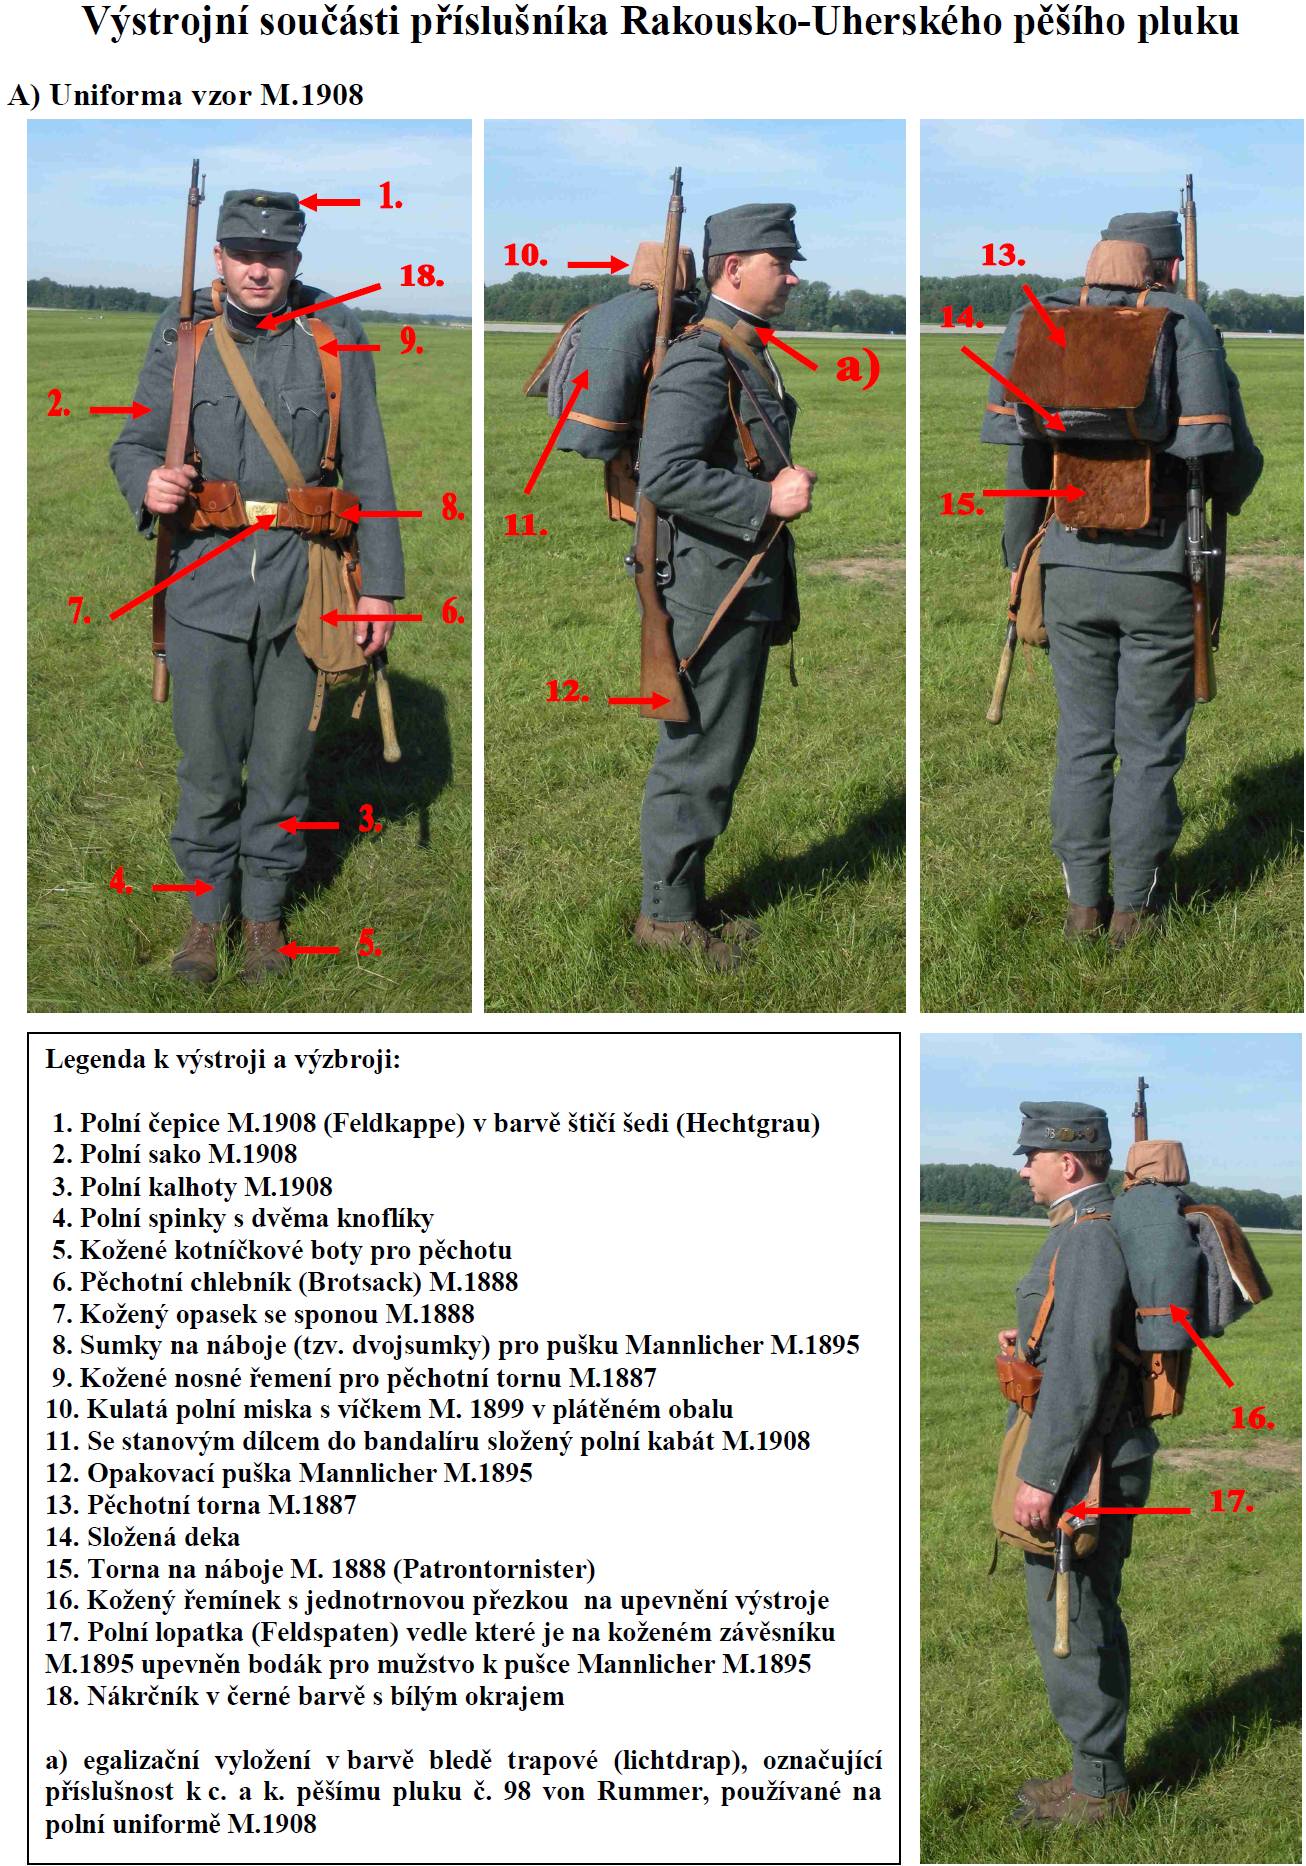 Uniformy c. a k. pechoty M.1908